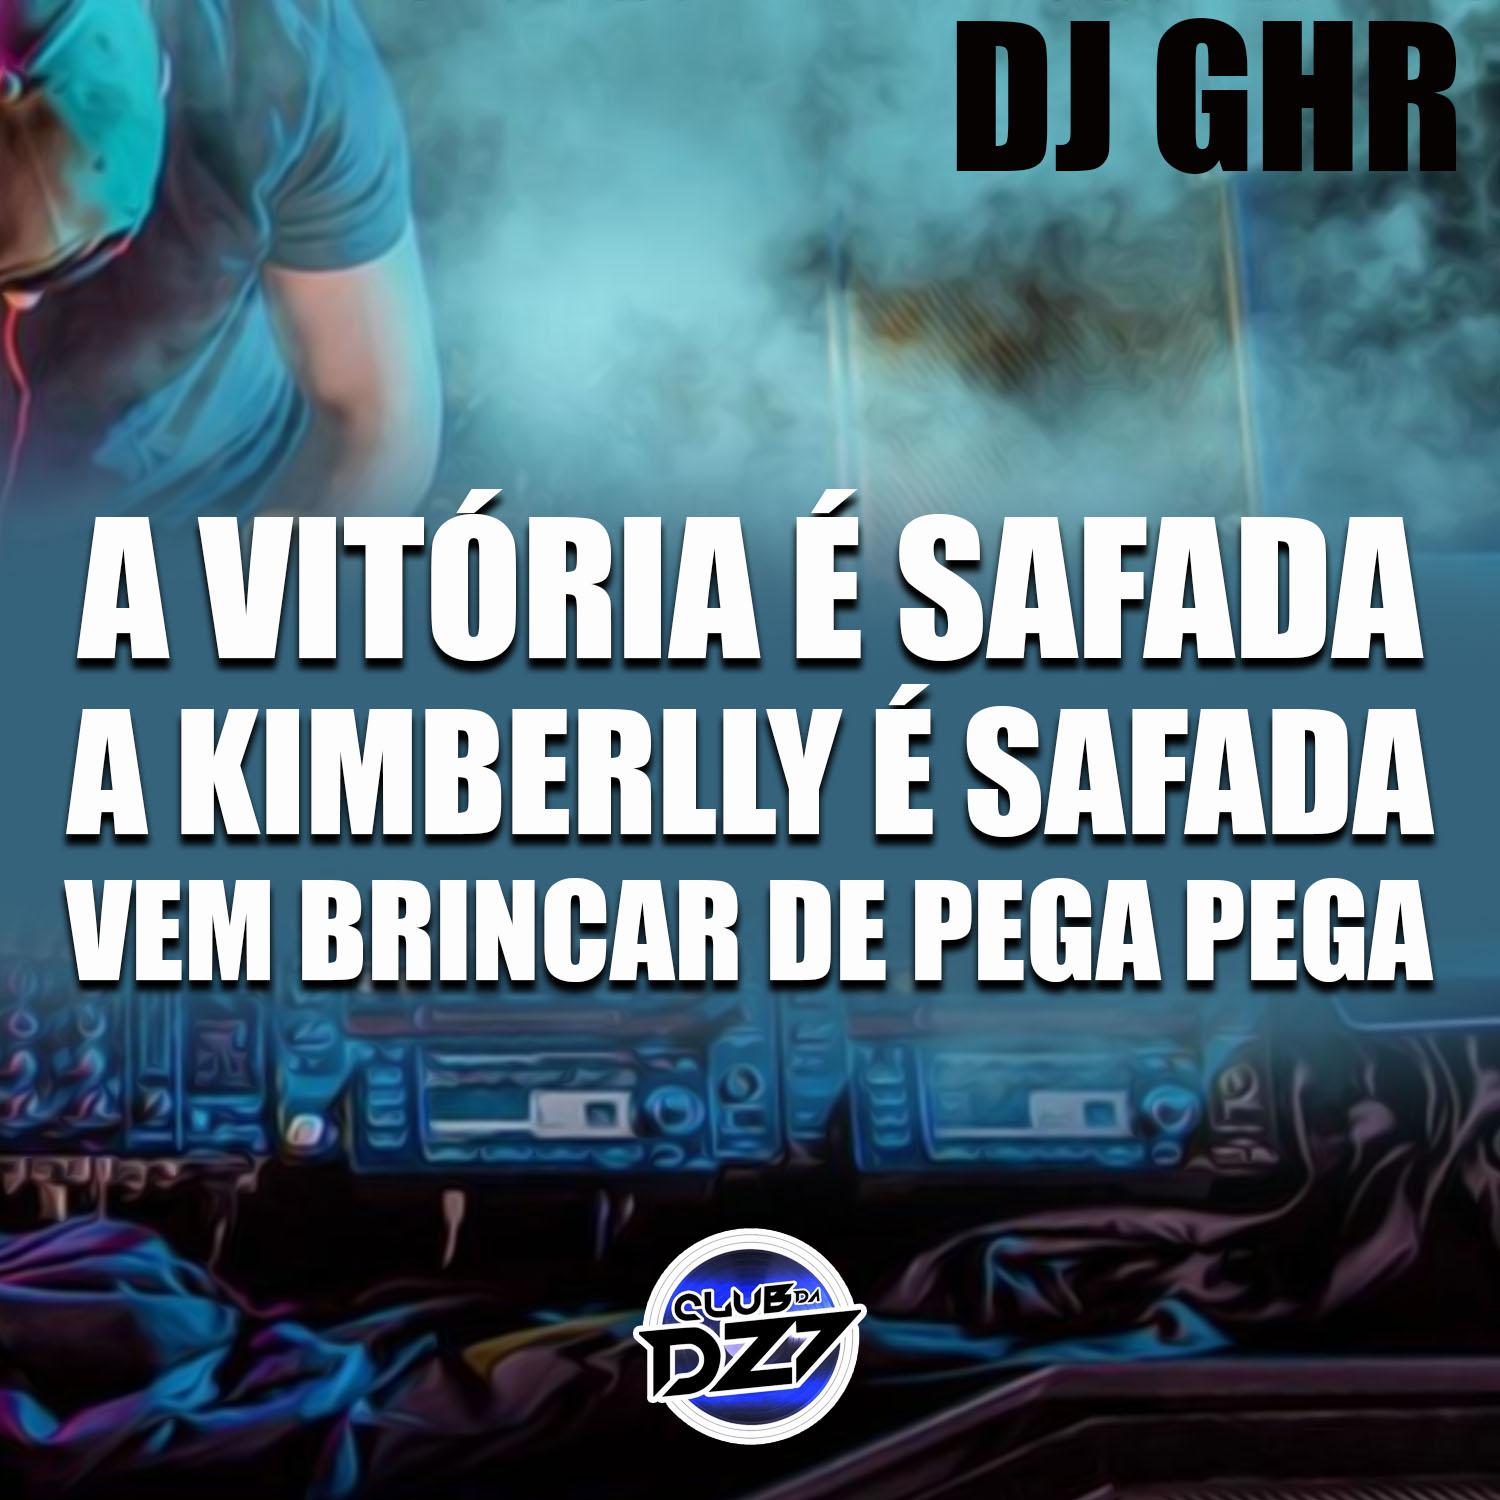 DJ GHR - A Vitoria É Safada a Kimberlly É Safada, Vem Brincar de Pega Pega (feat. Mc Nem Jm & MC RD)